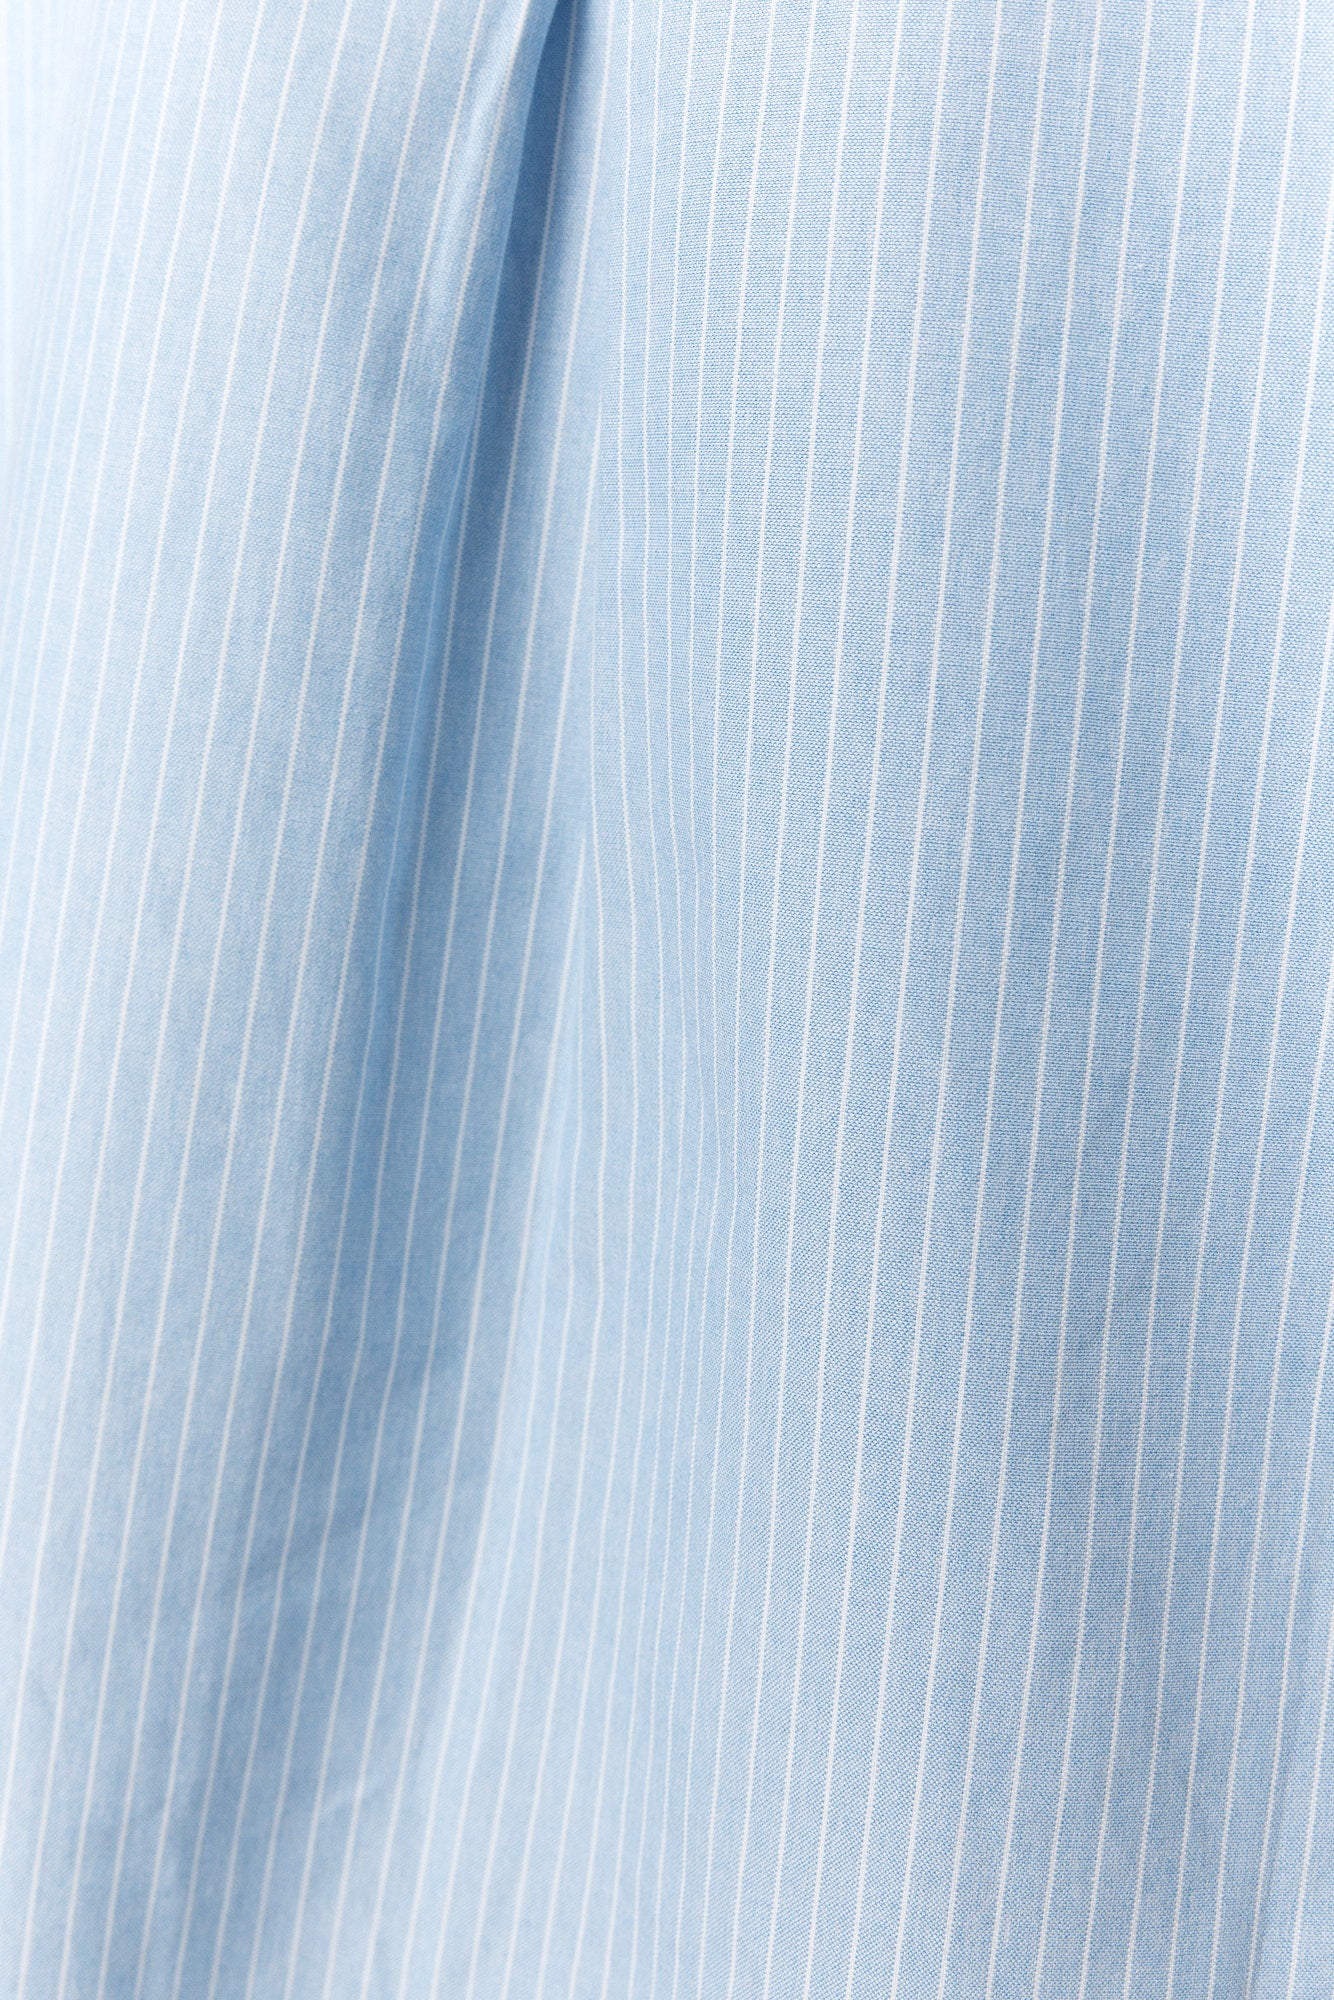 Blue striped shirt | Valentine